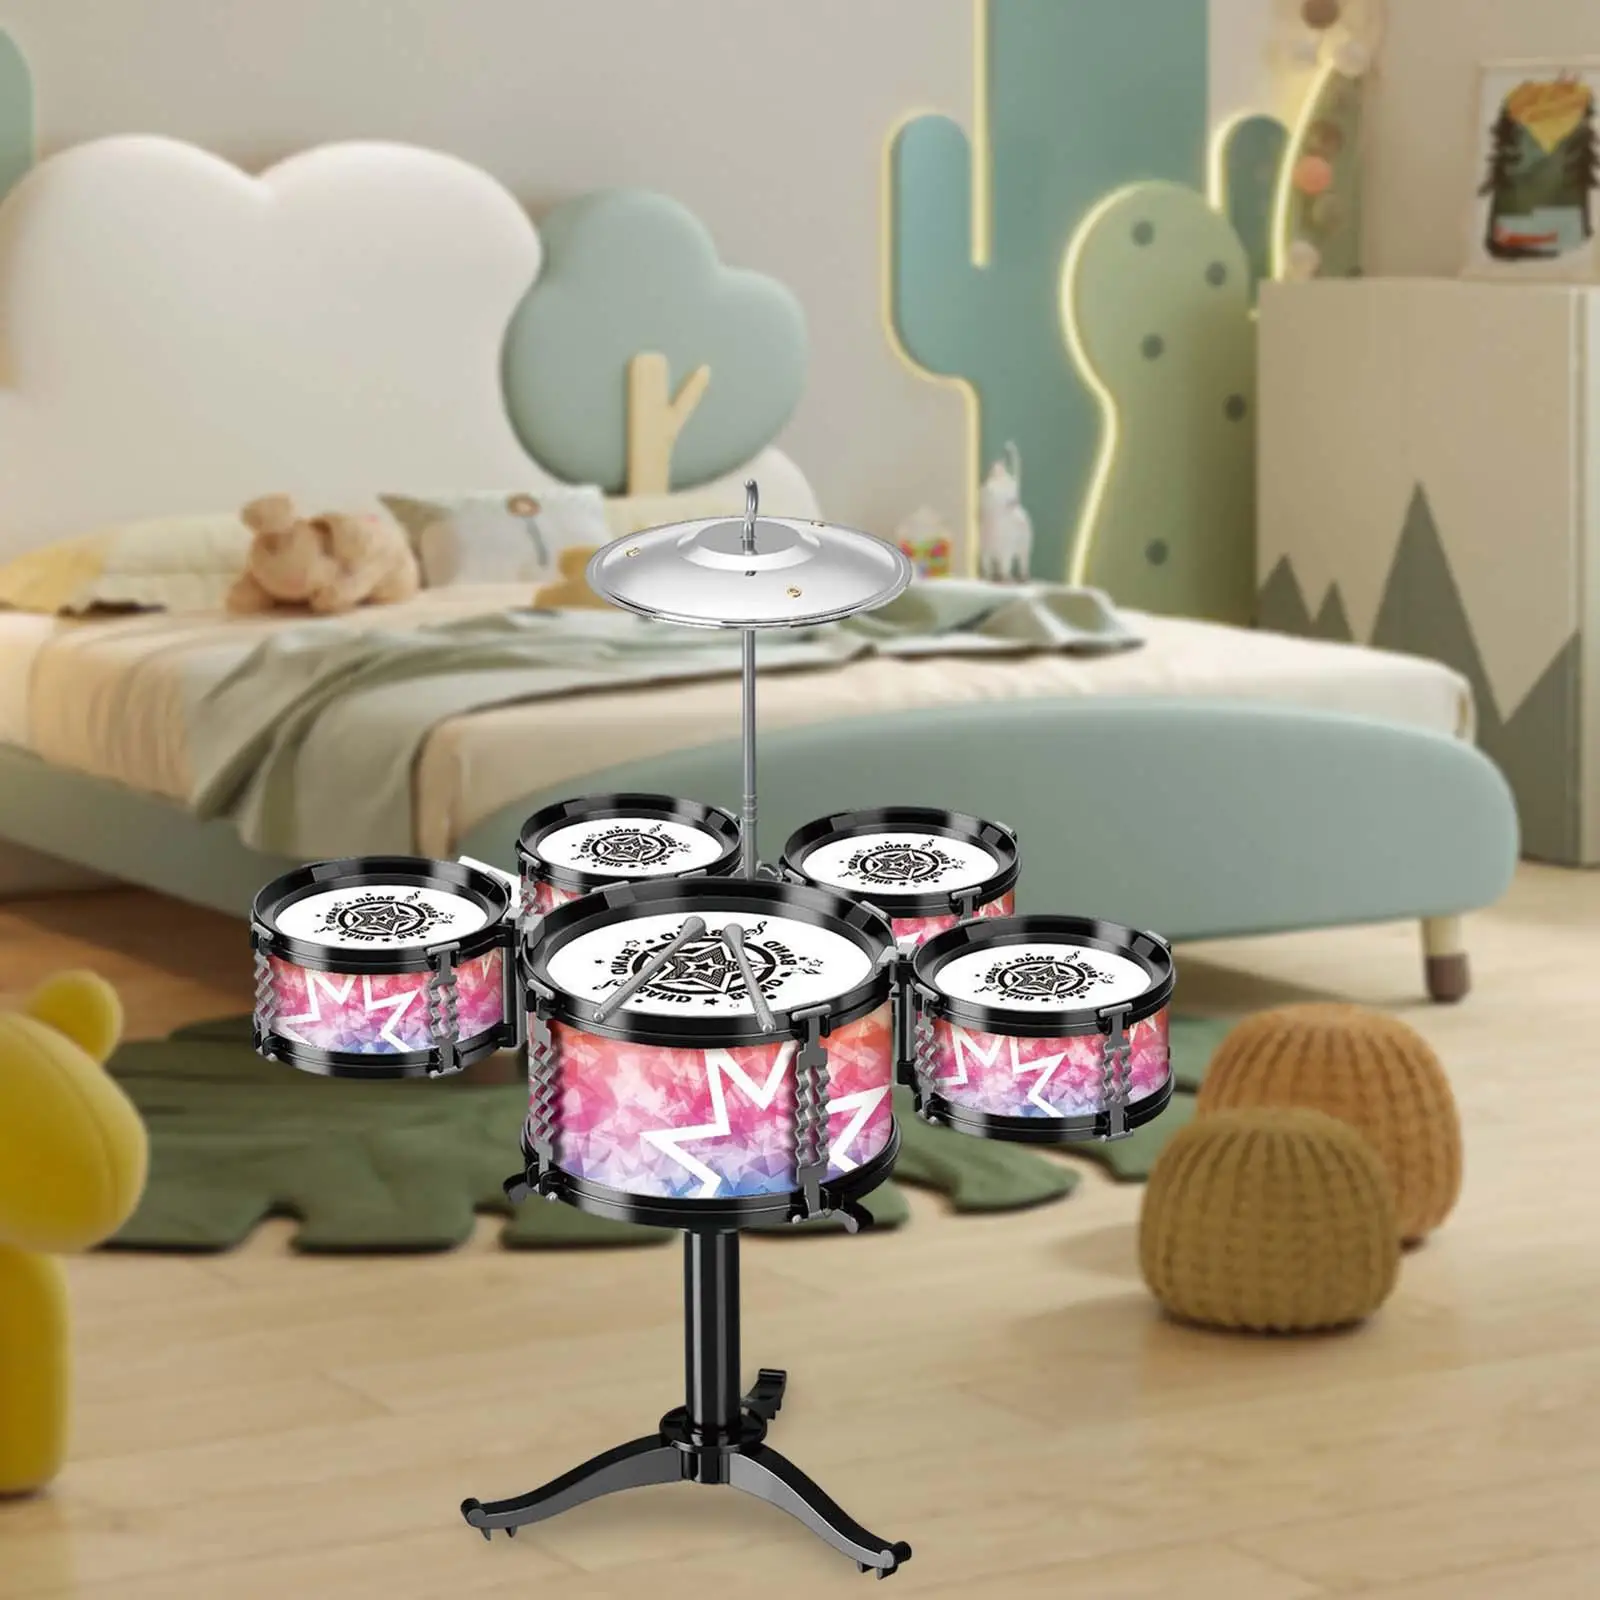 Kids Jazz Drum Set Development Toy Musical Instrument Educational Toy Kids Jazz Drum Kits Sensory Toy for Birthday Gift Kids